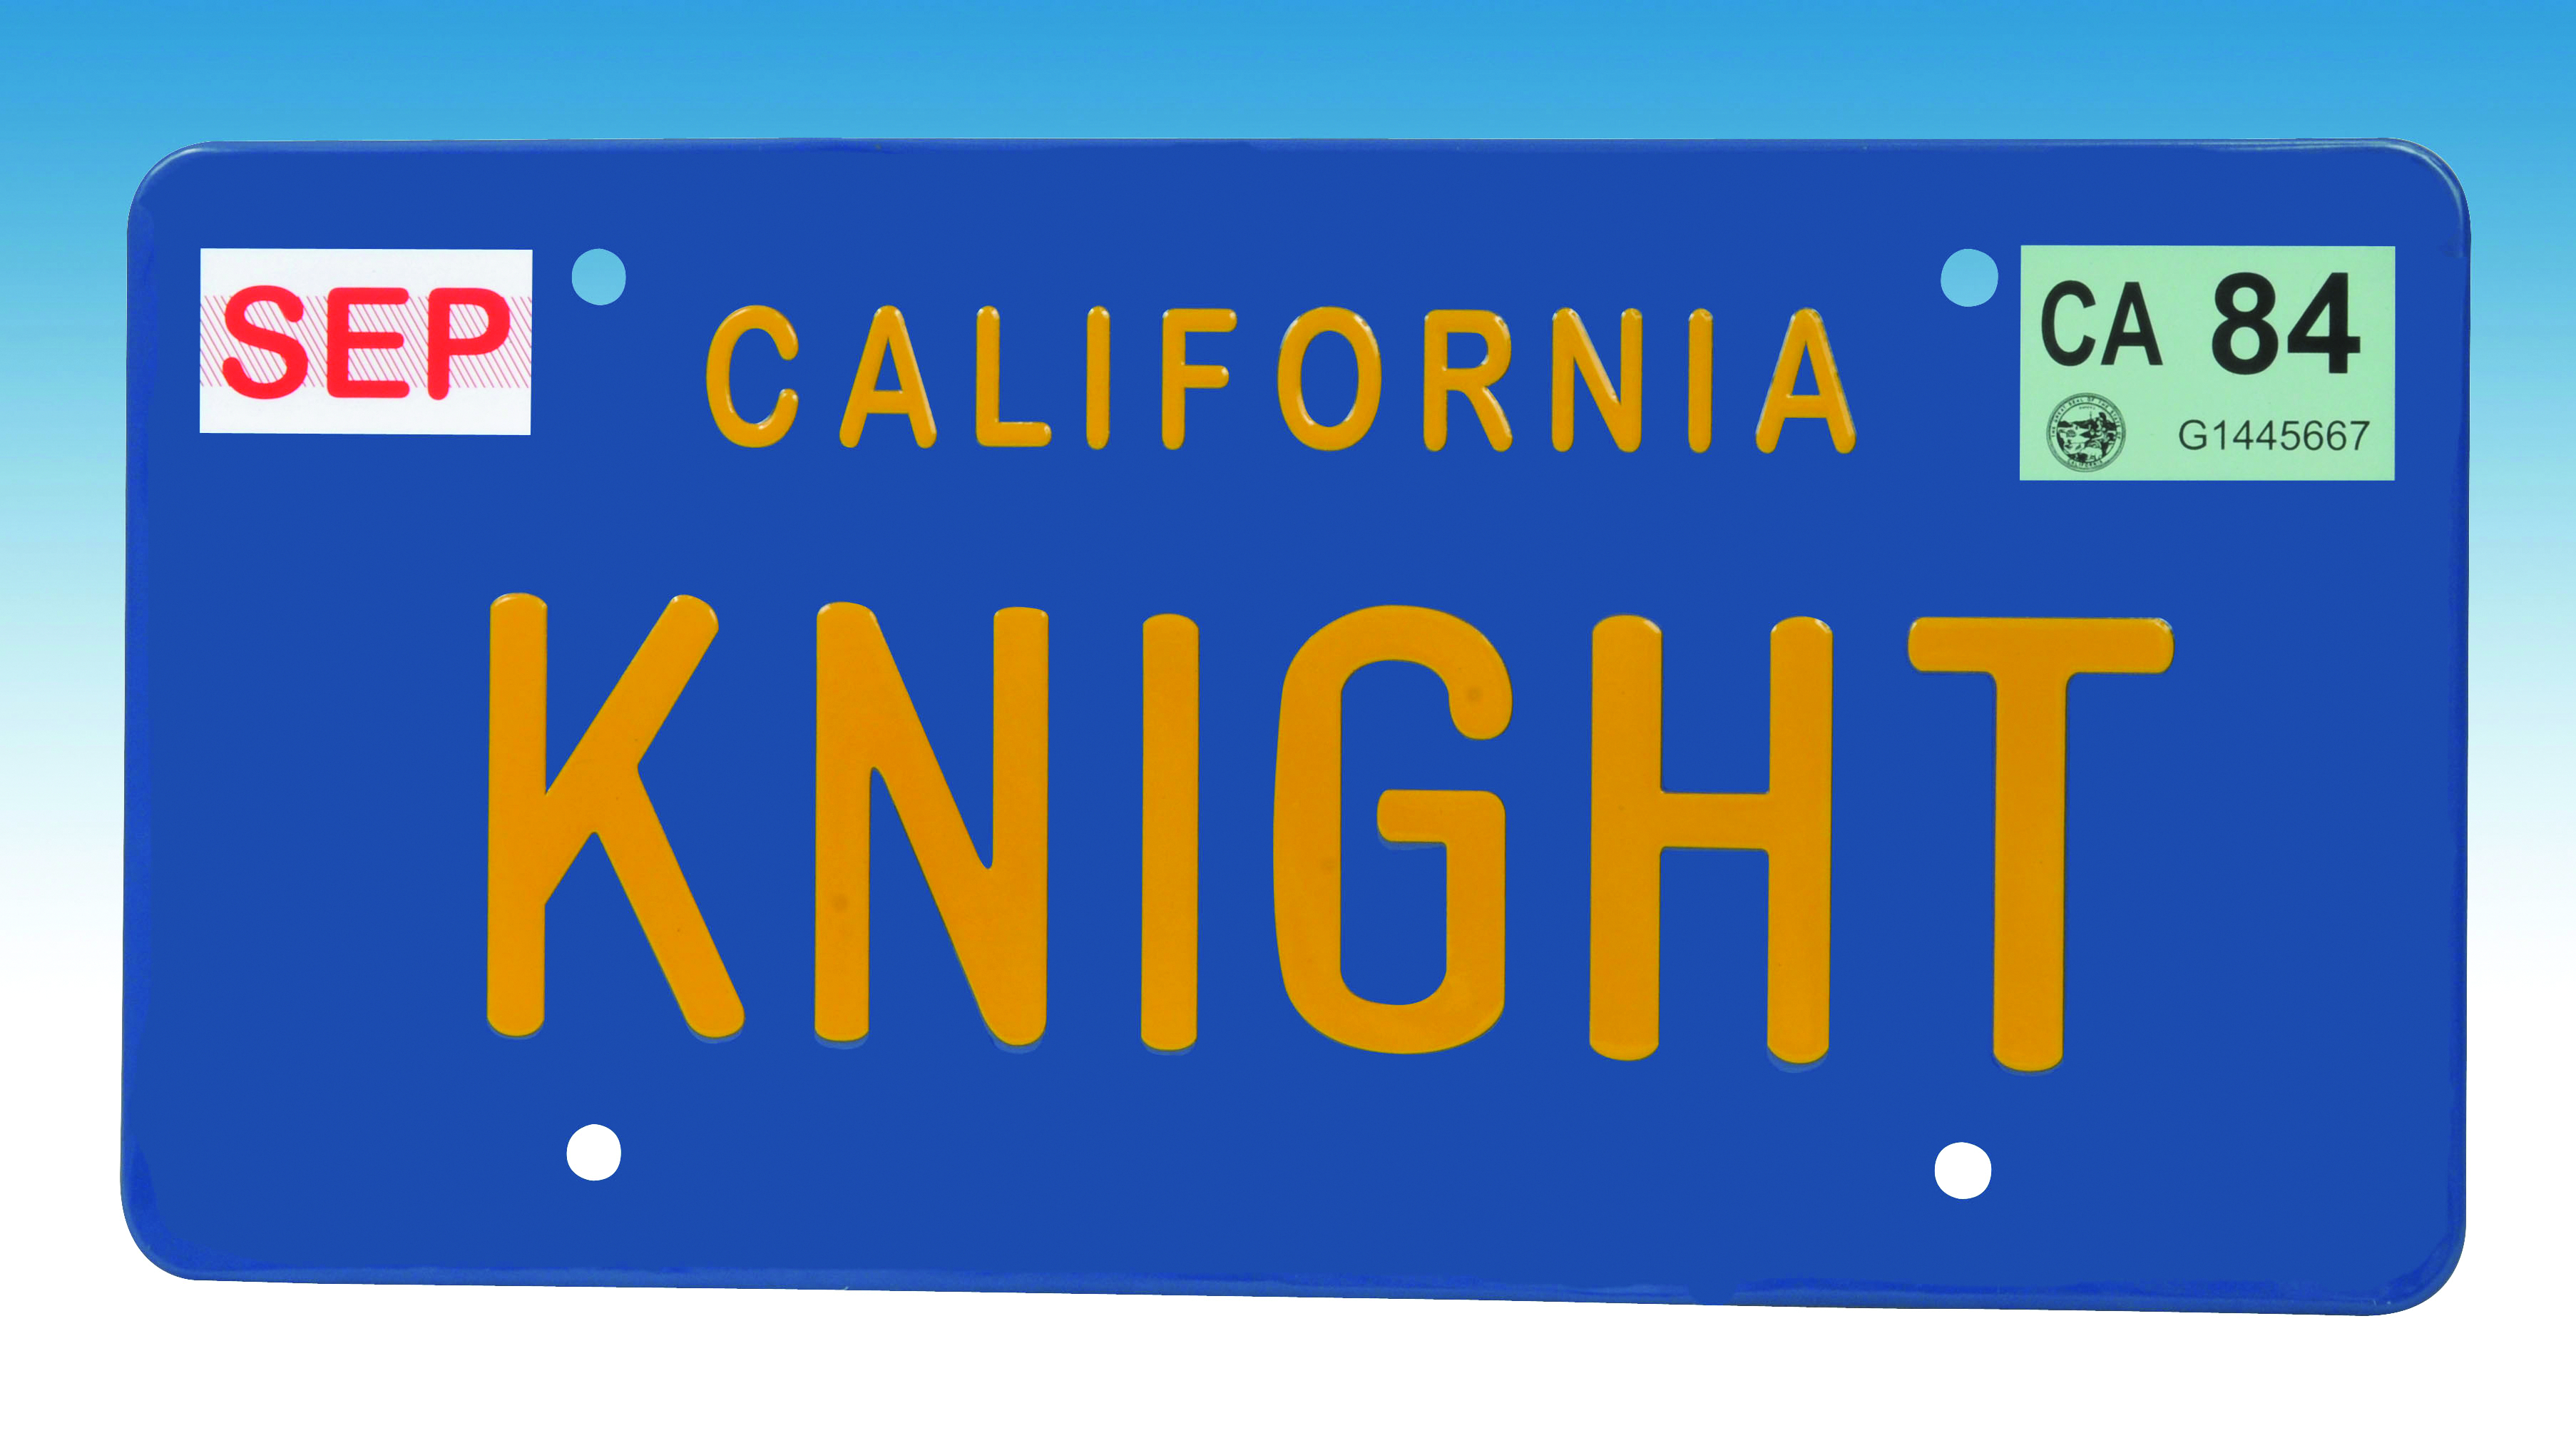 Knight Rider California Metal License Plate Replica Aluminum with Glossy Finish 